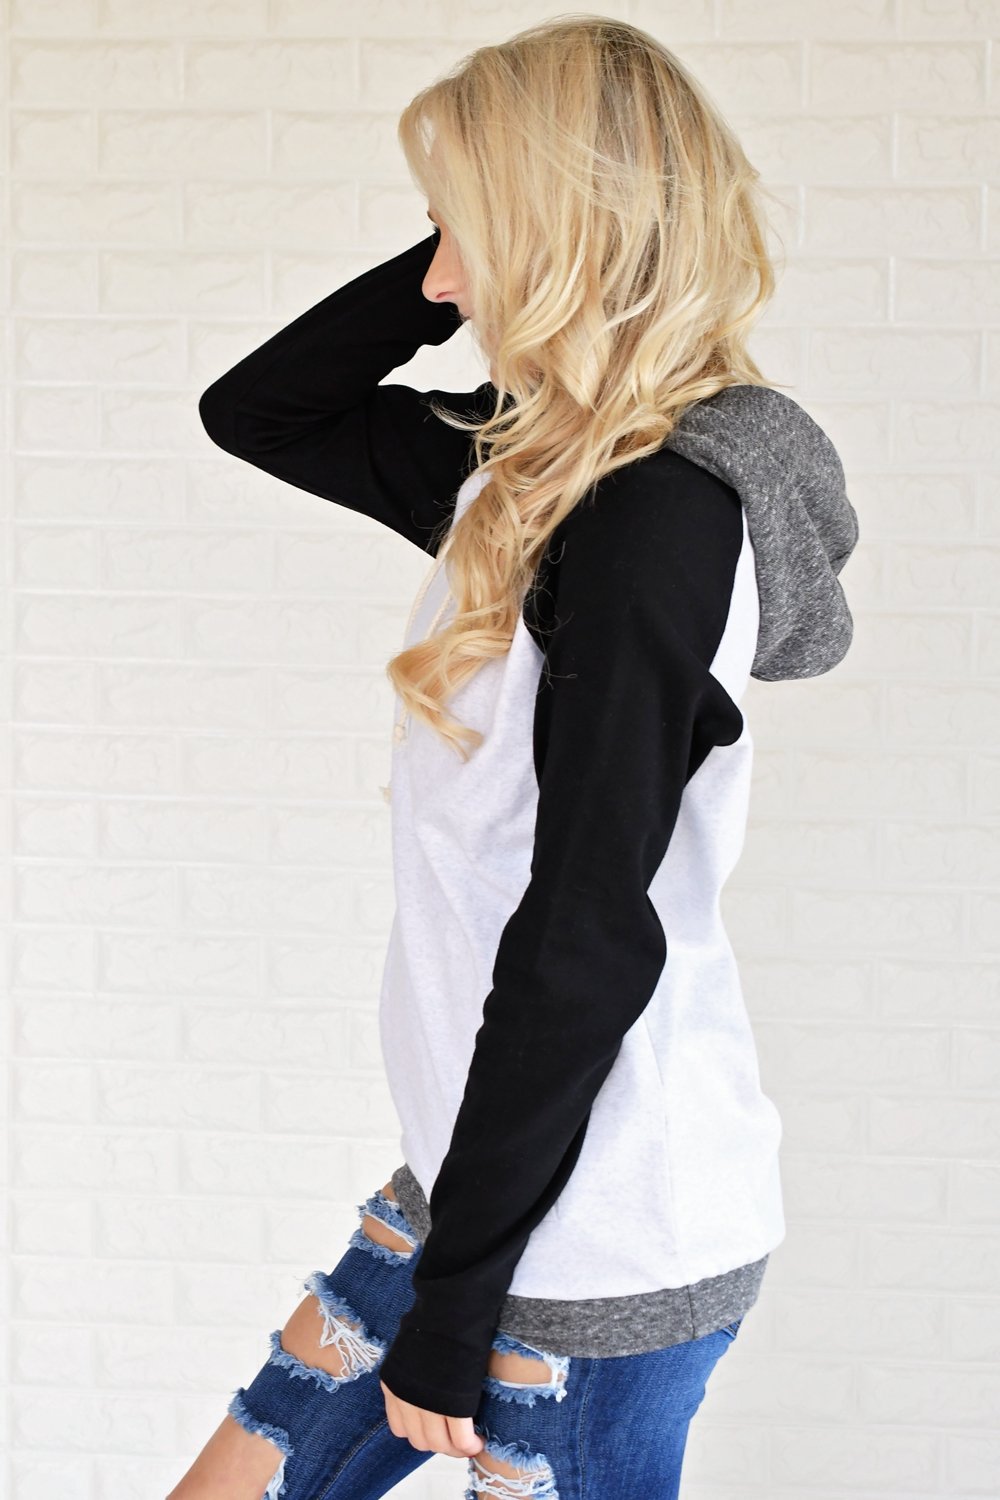 Ampersand Ave. Double Hooded Sweatshirt ~ Black & White